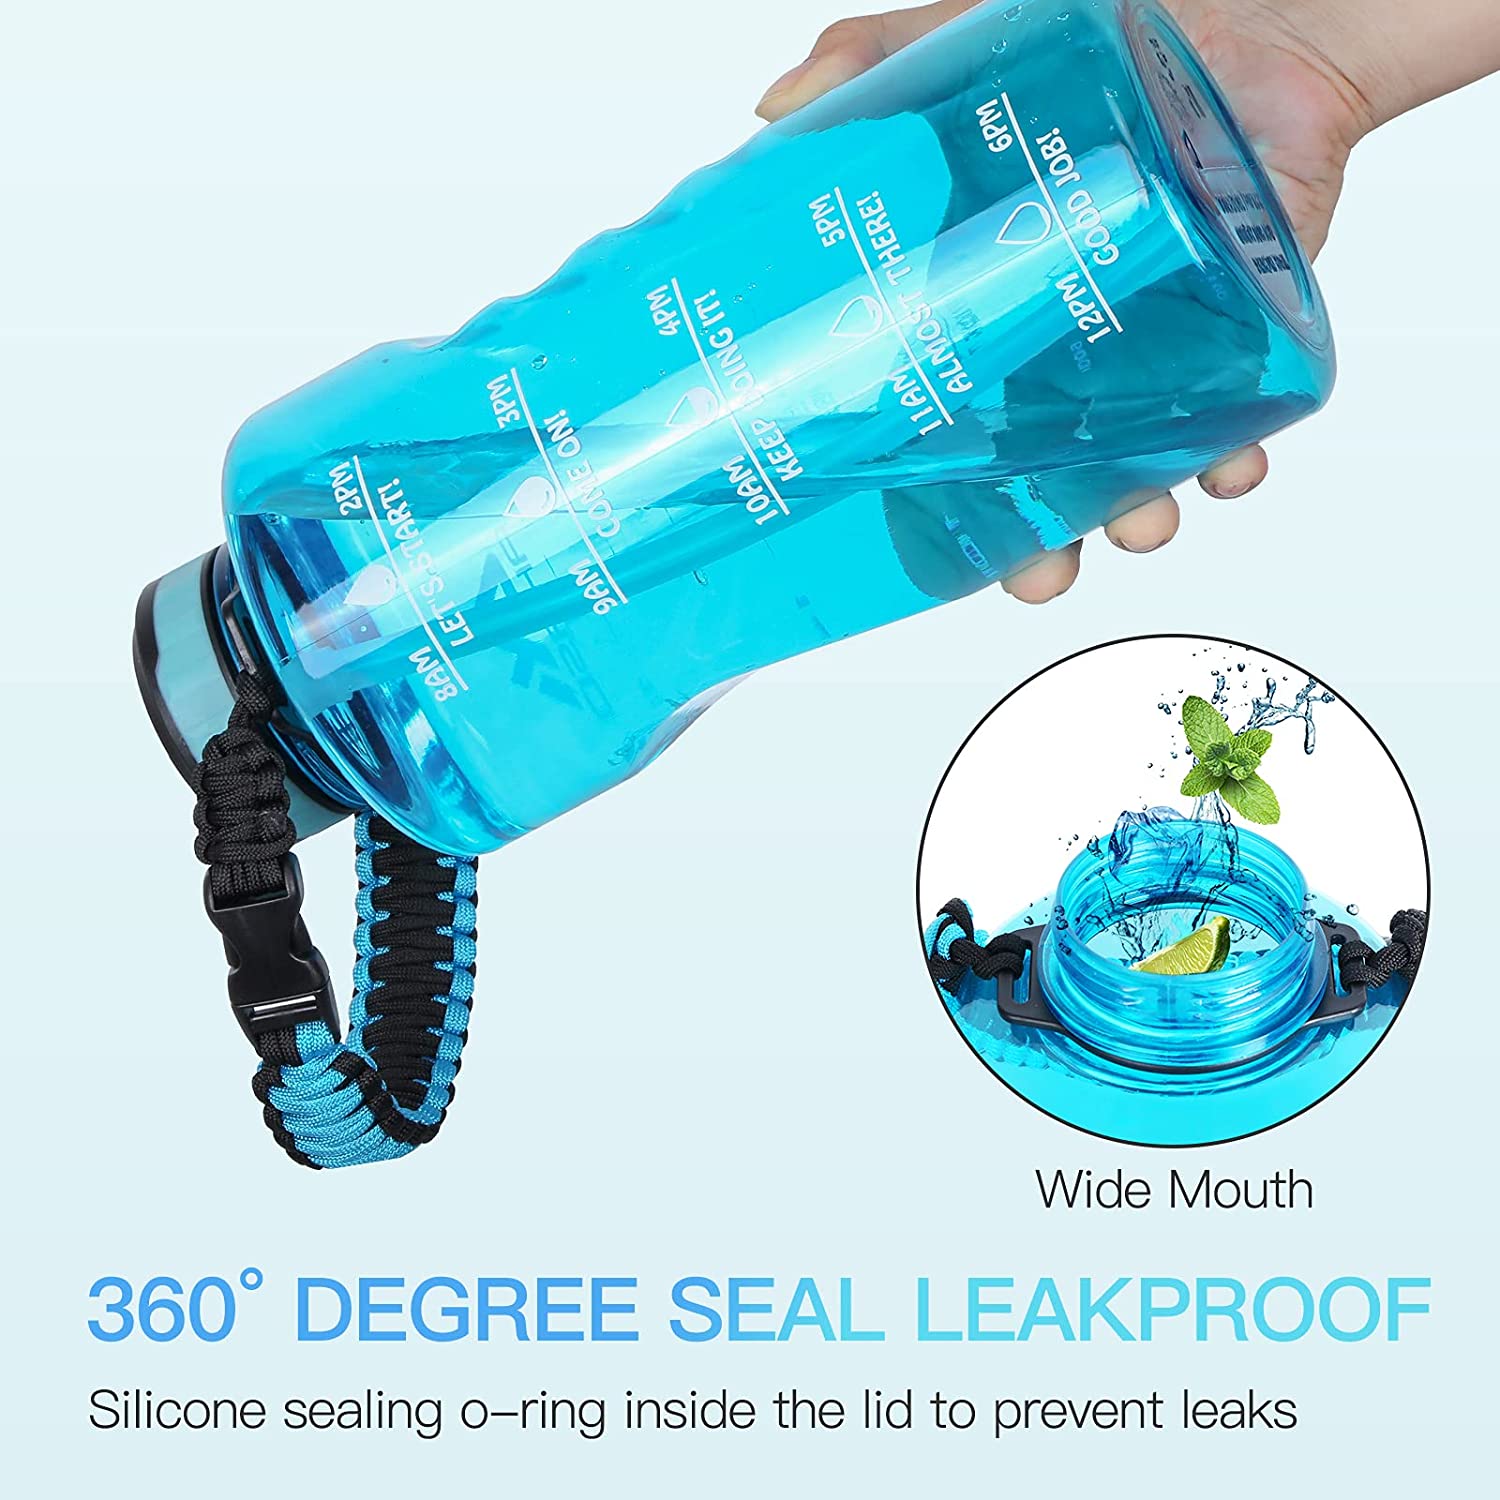 64oz BPA-free Water Bottle with Time Markings - akasooutdoors